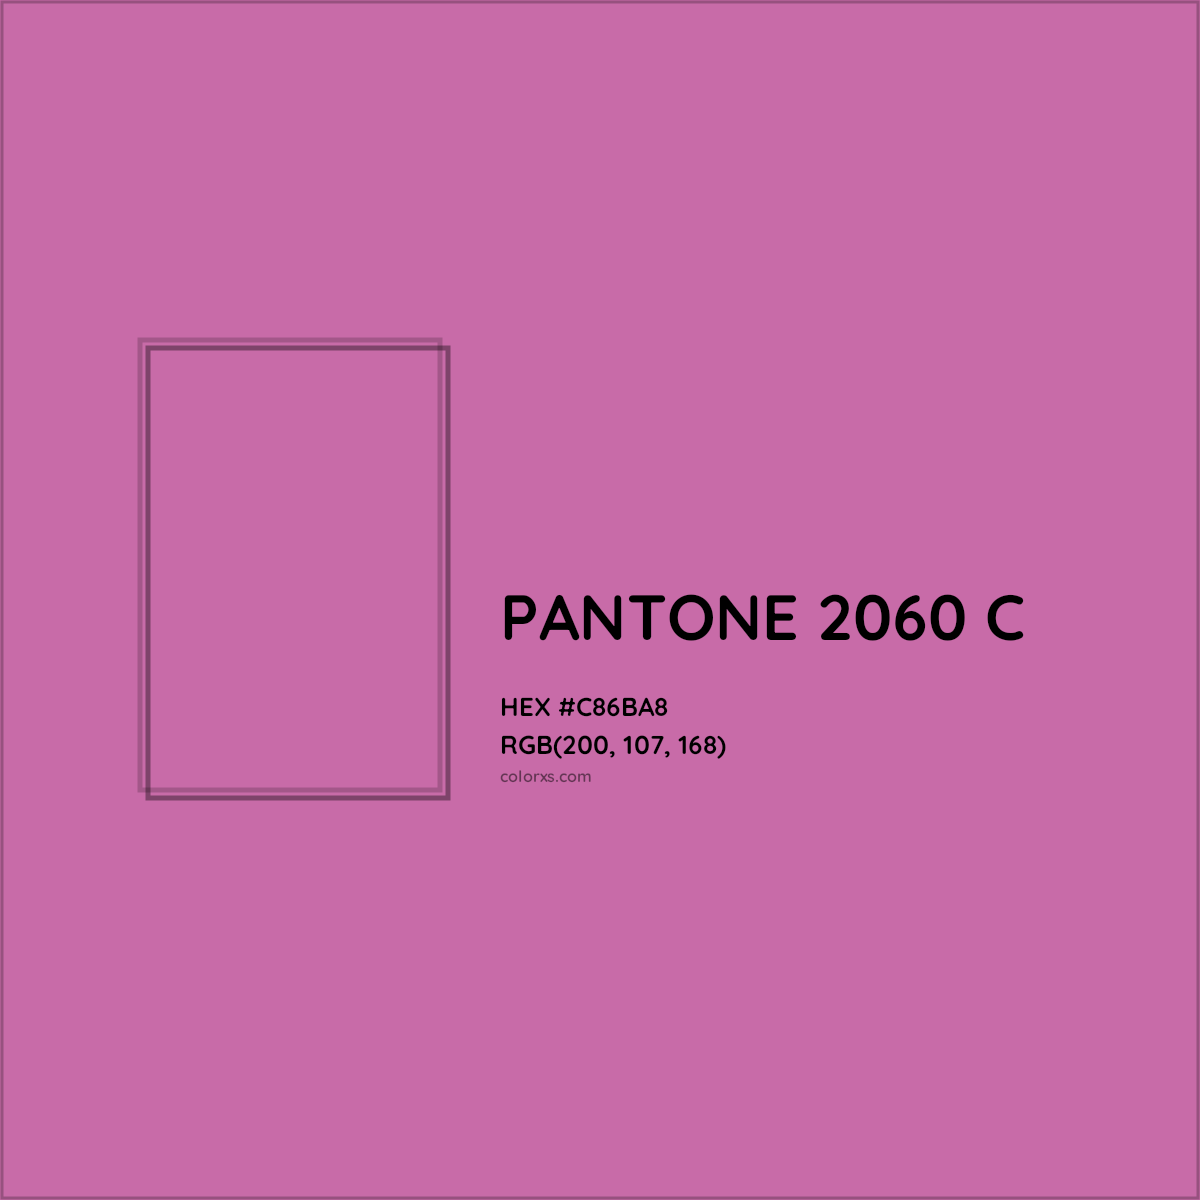 HEX #C86BA8 PANTONE 2060 C CMS Pantone PMS - Color Code